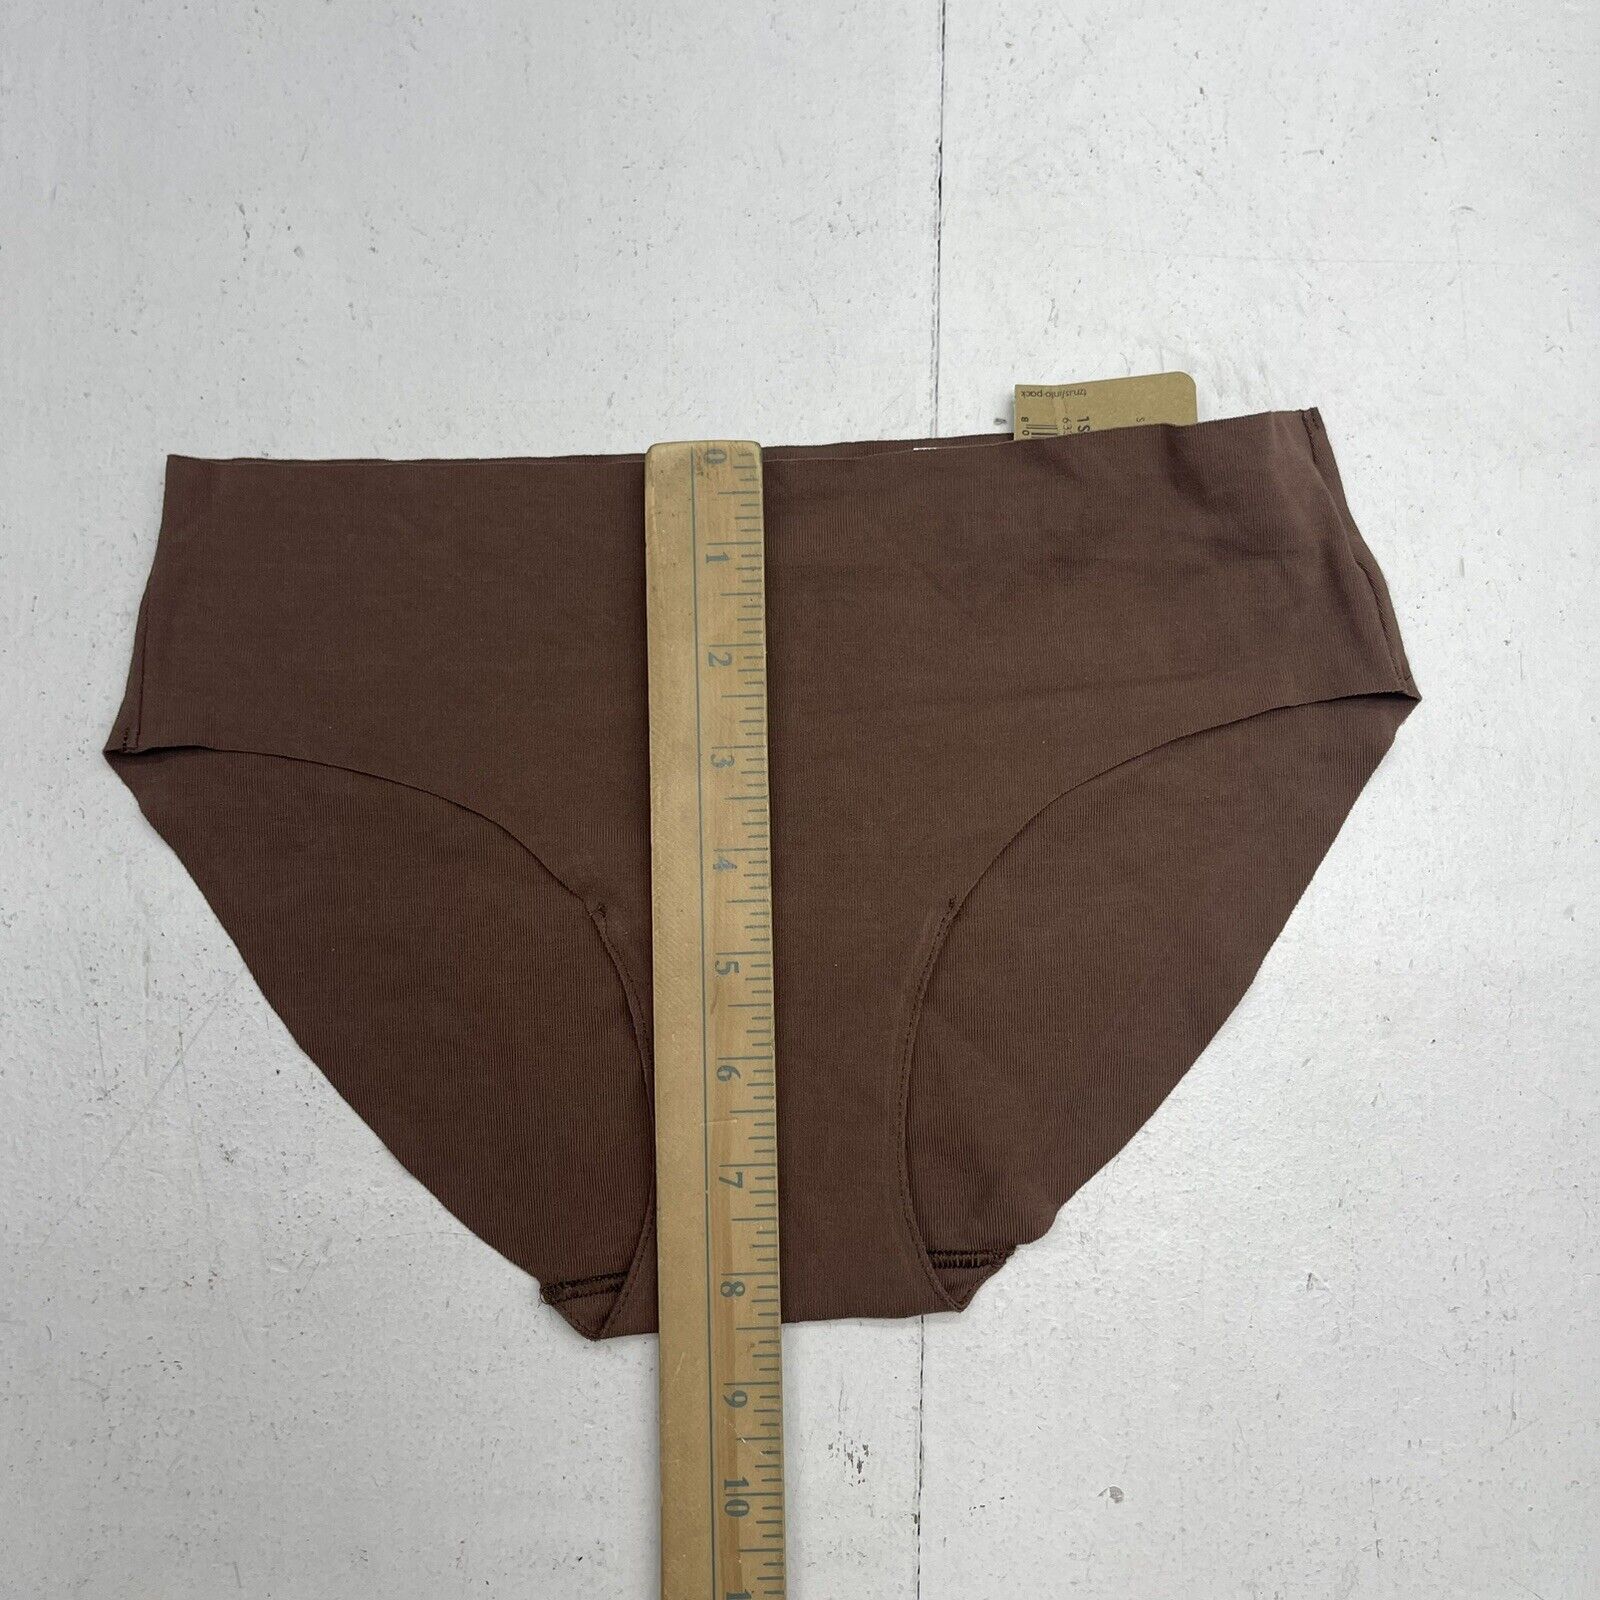 Tezenis Brown Cotton Panties